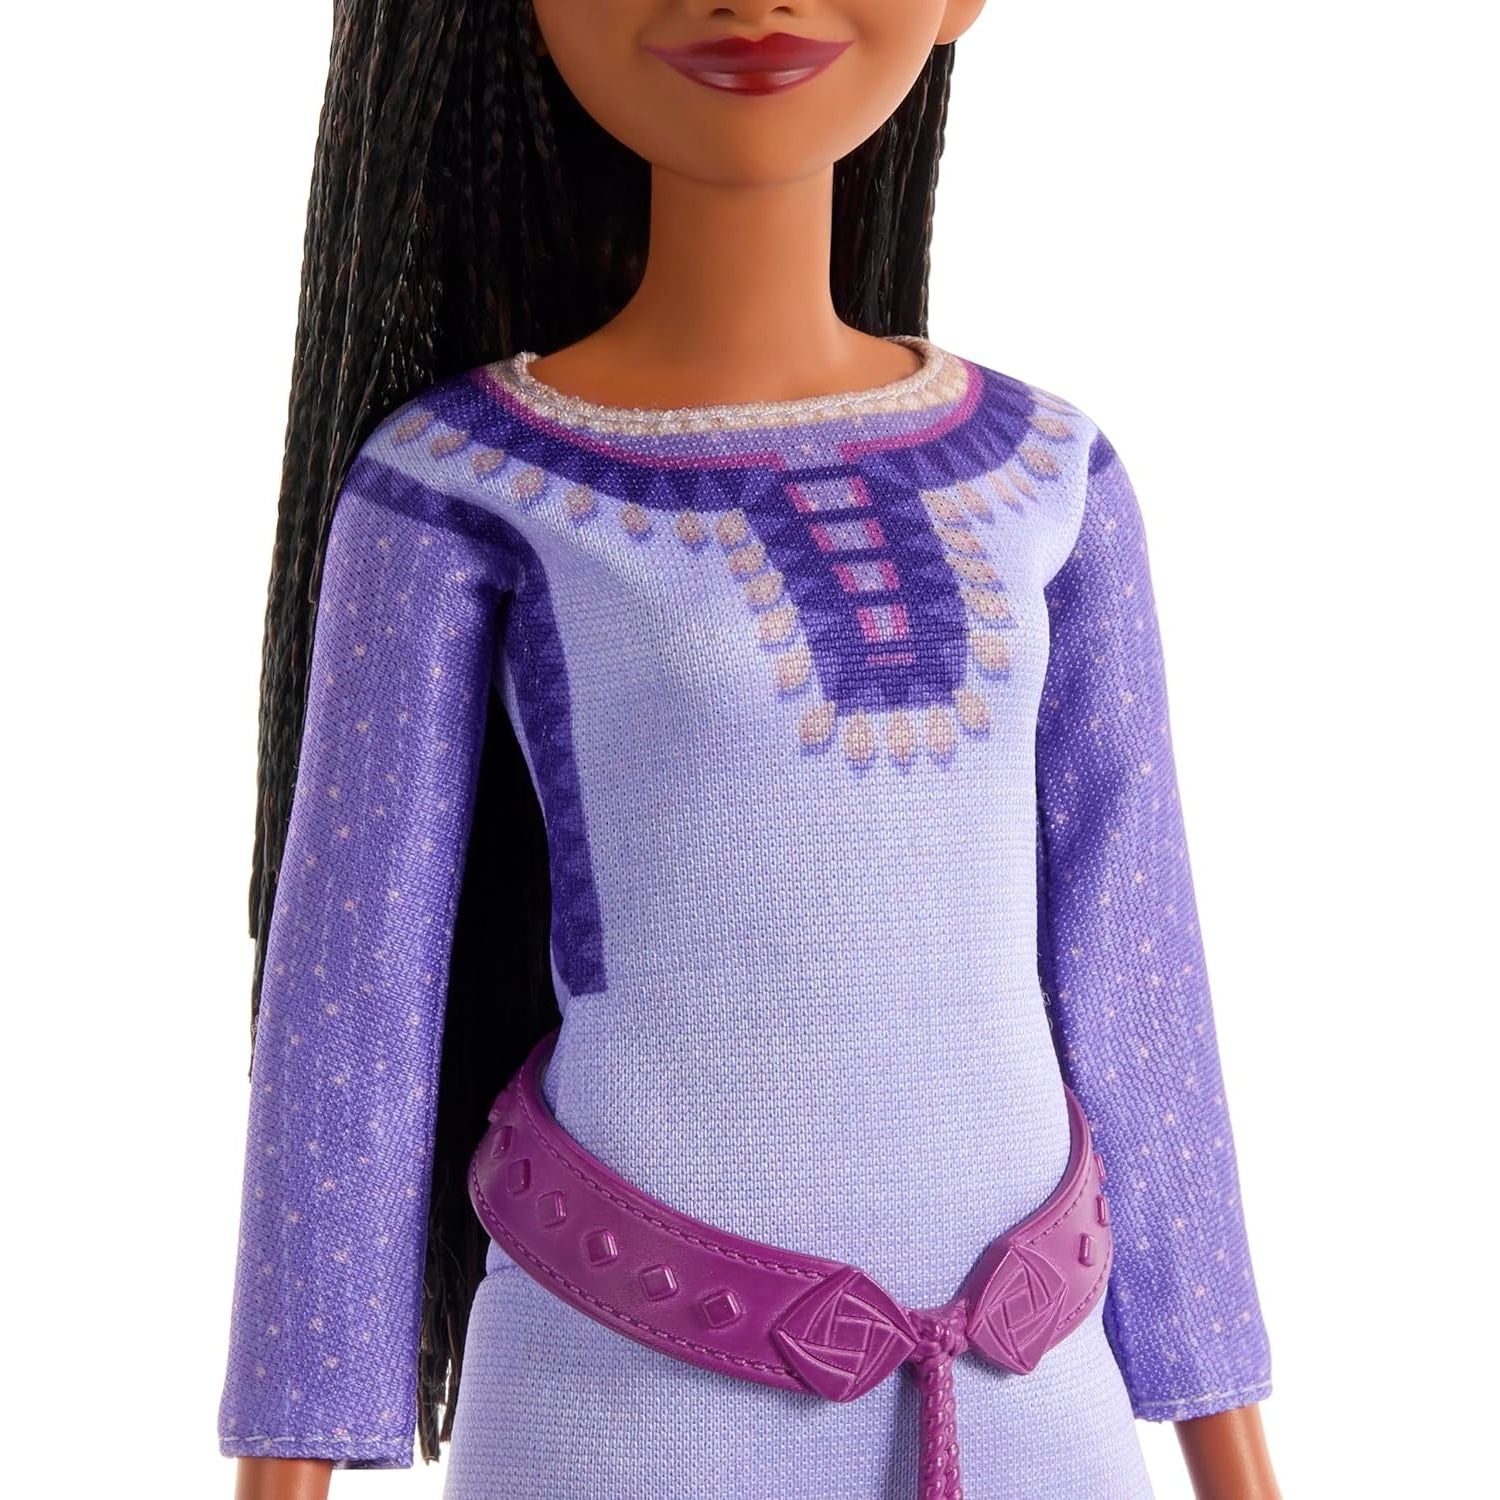 Disney Wish Asha of Rosas Fashion Doll Disney